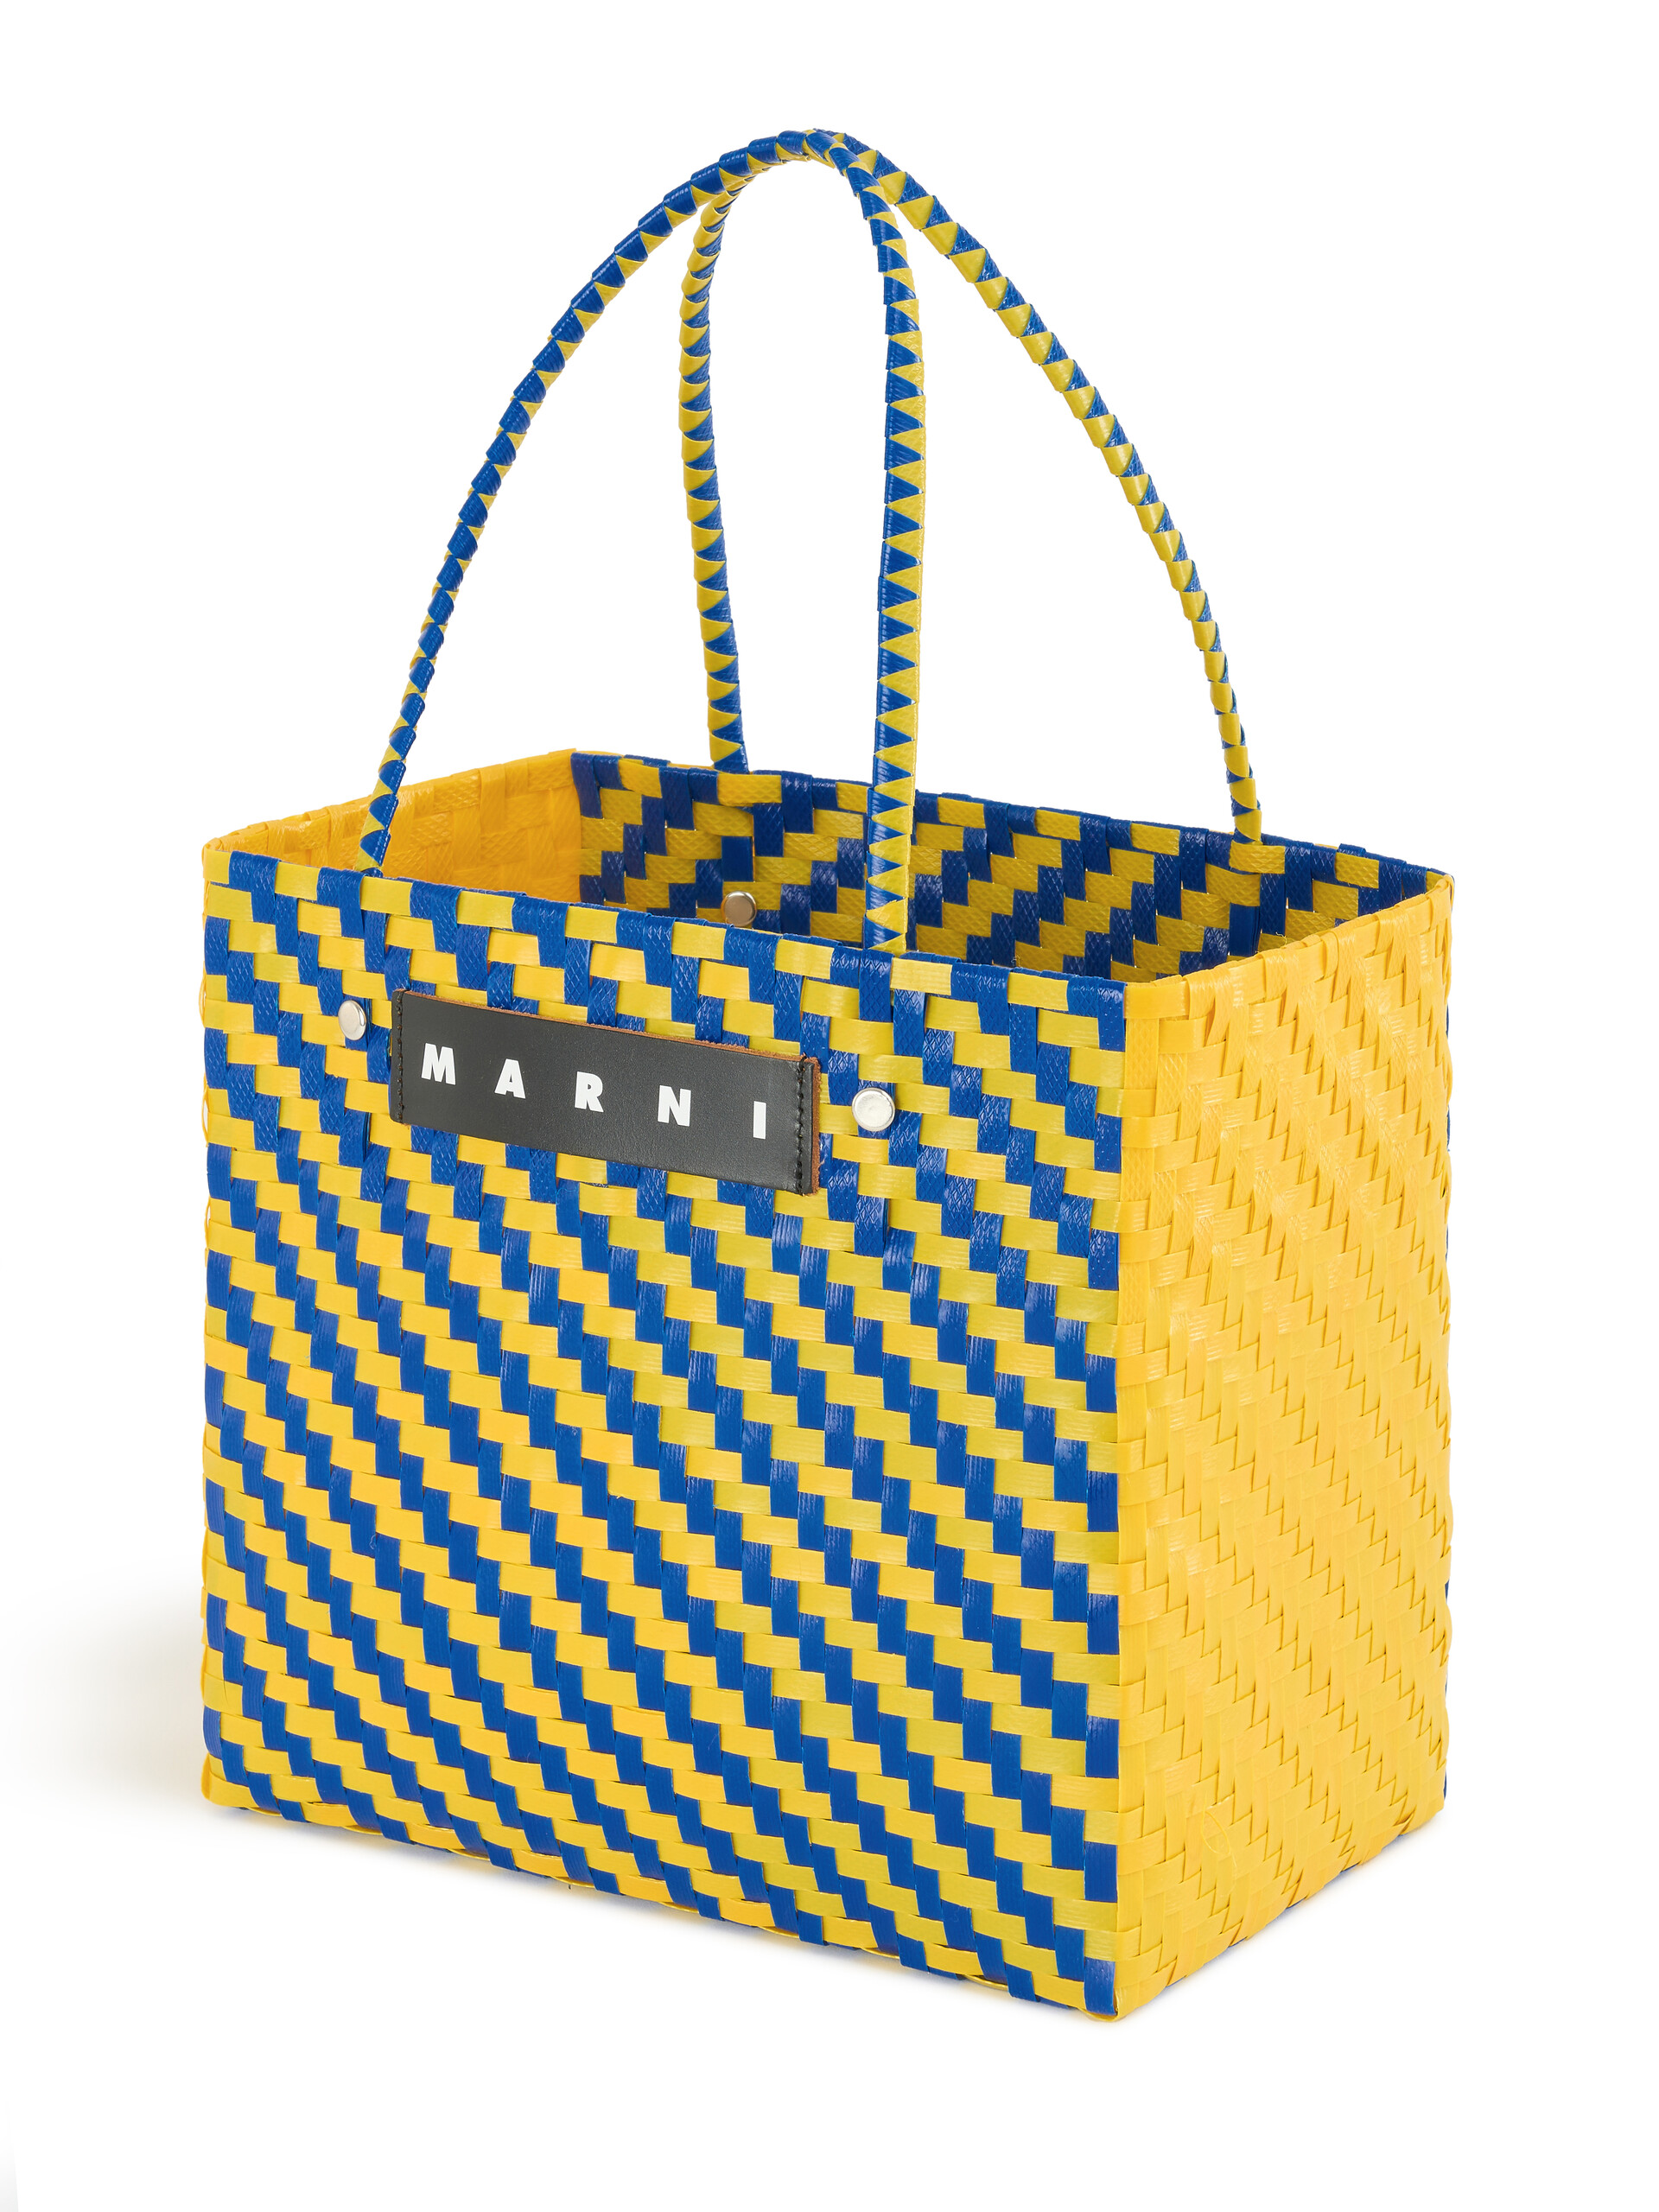 Sac Marni Market Mini Basket bleu et jaune avec motif en zigzag - Sacs cabas - Image 4